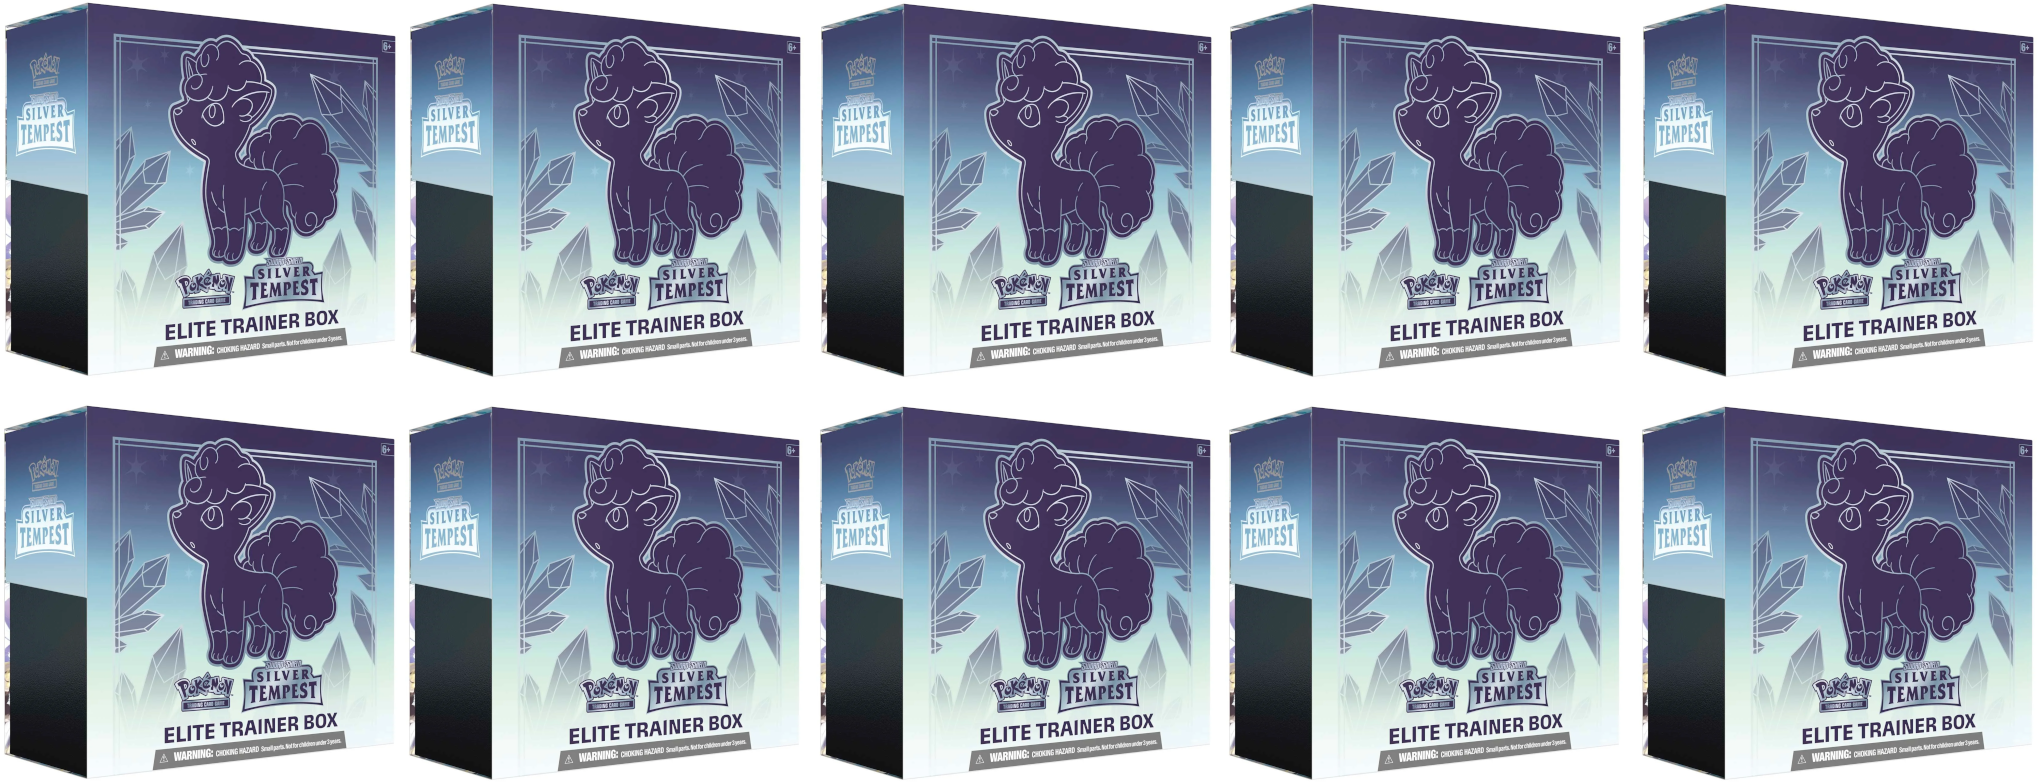 Sword & Shield: Silver Tempest - Elite Trainer Box Case | Devastation Store